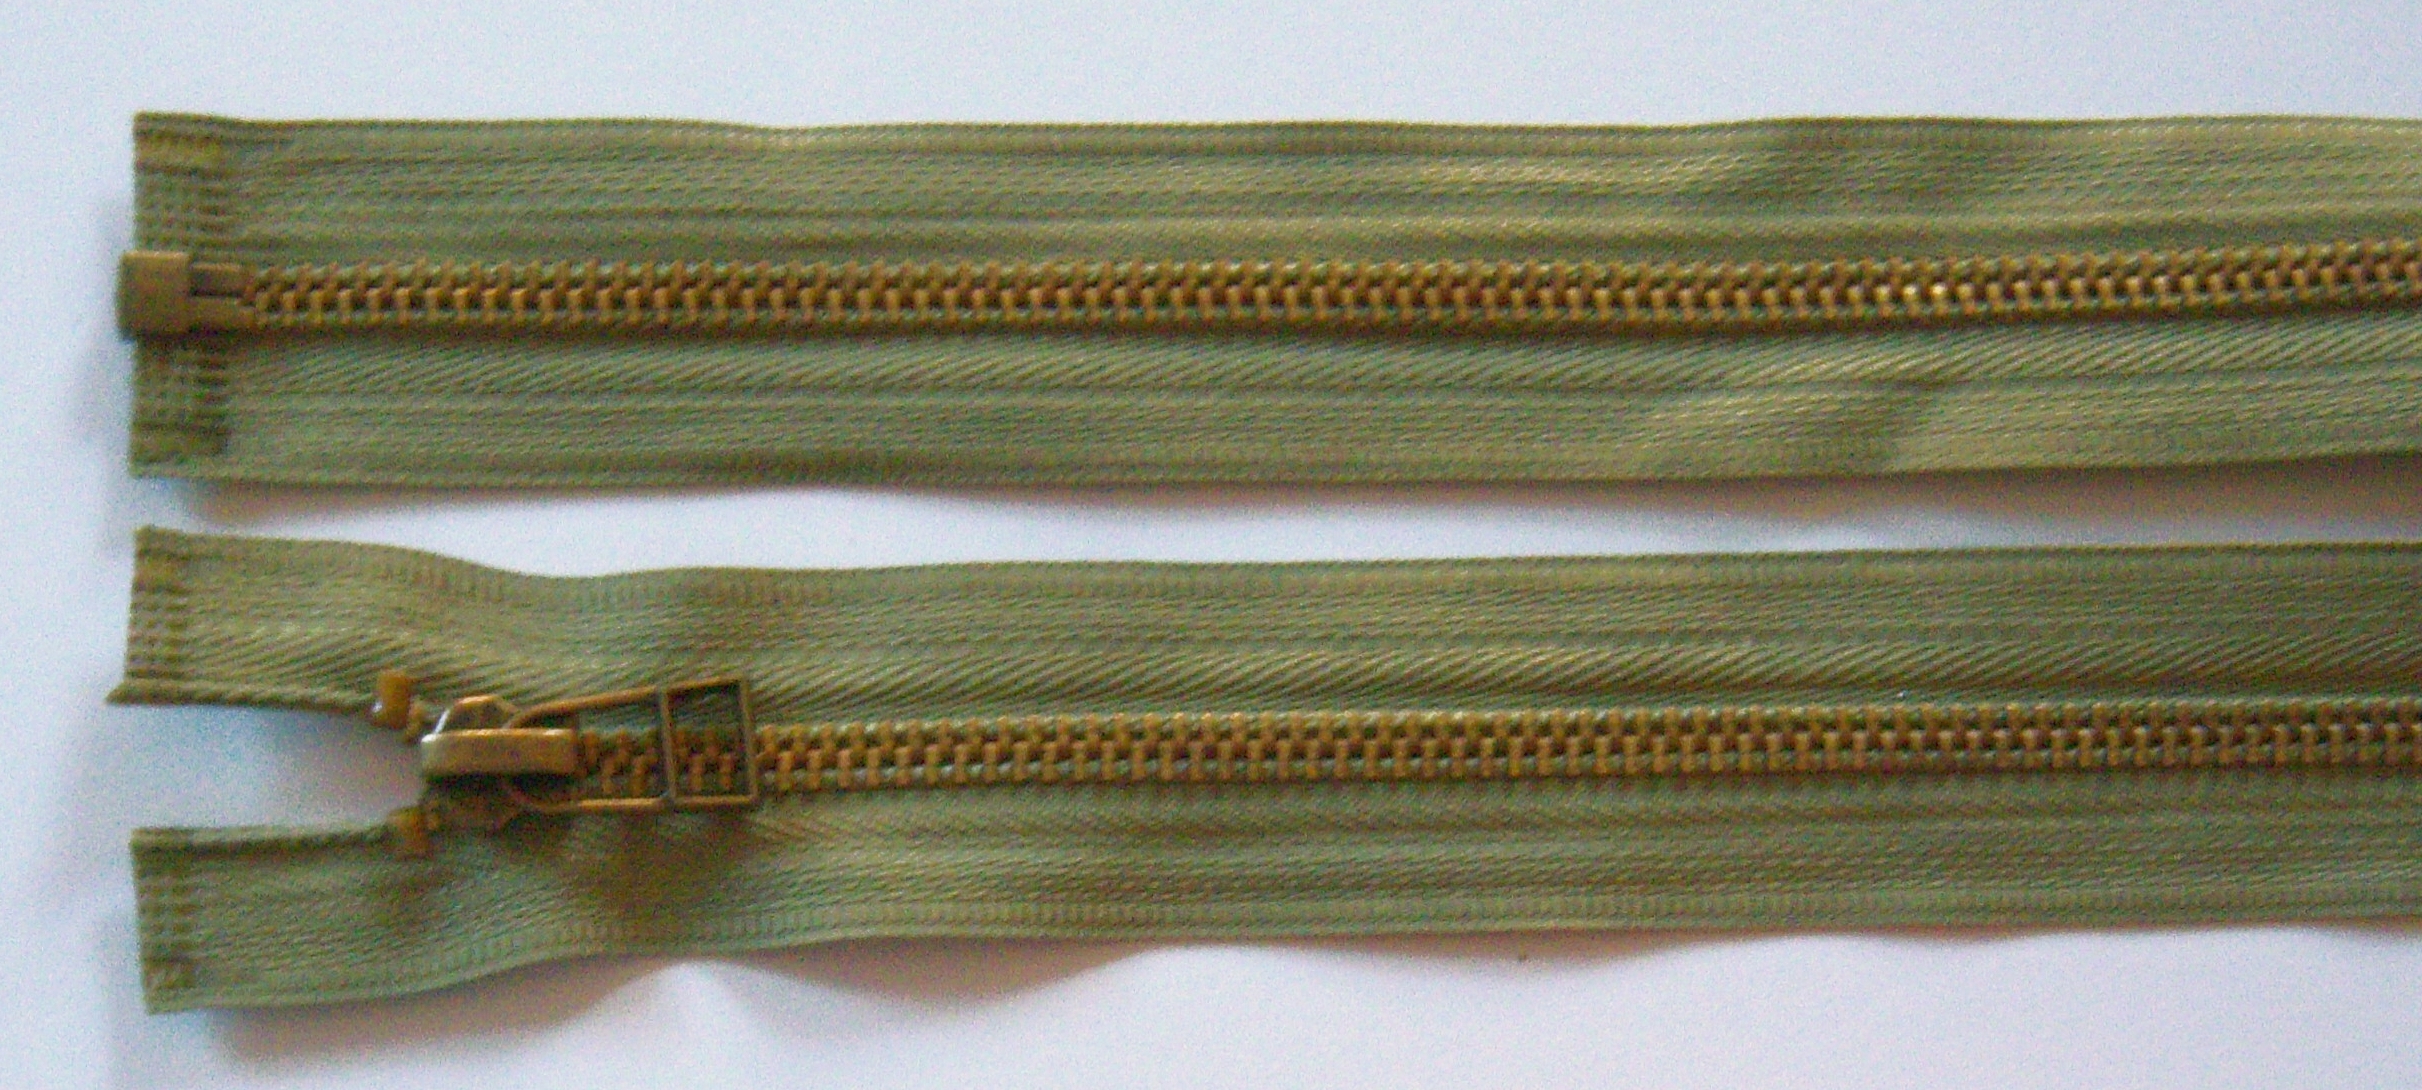 Willow YKK 24" Metal Separating Zipper